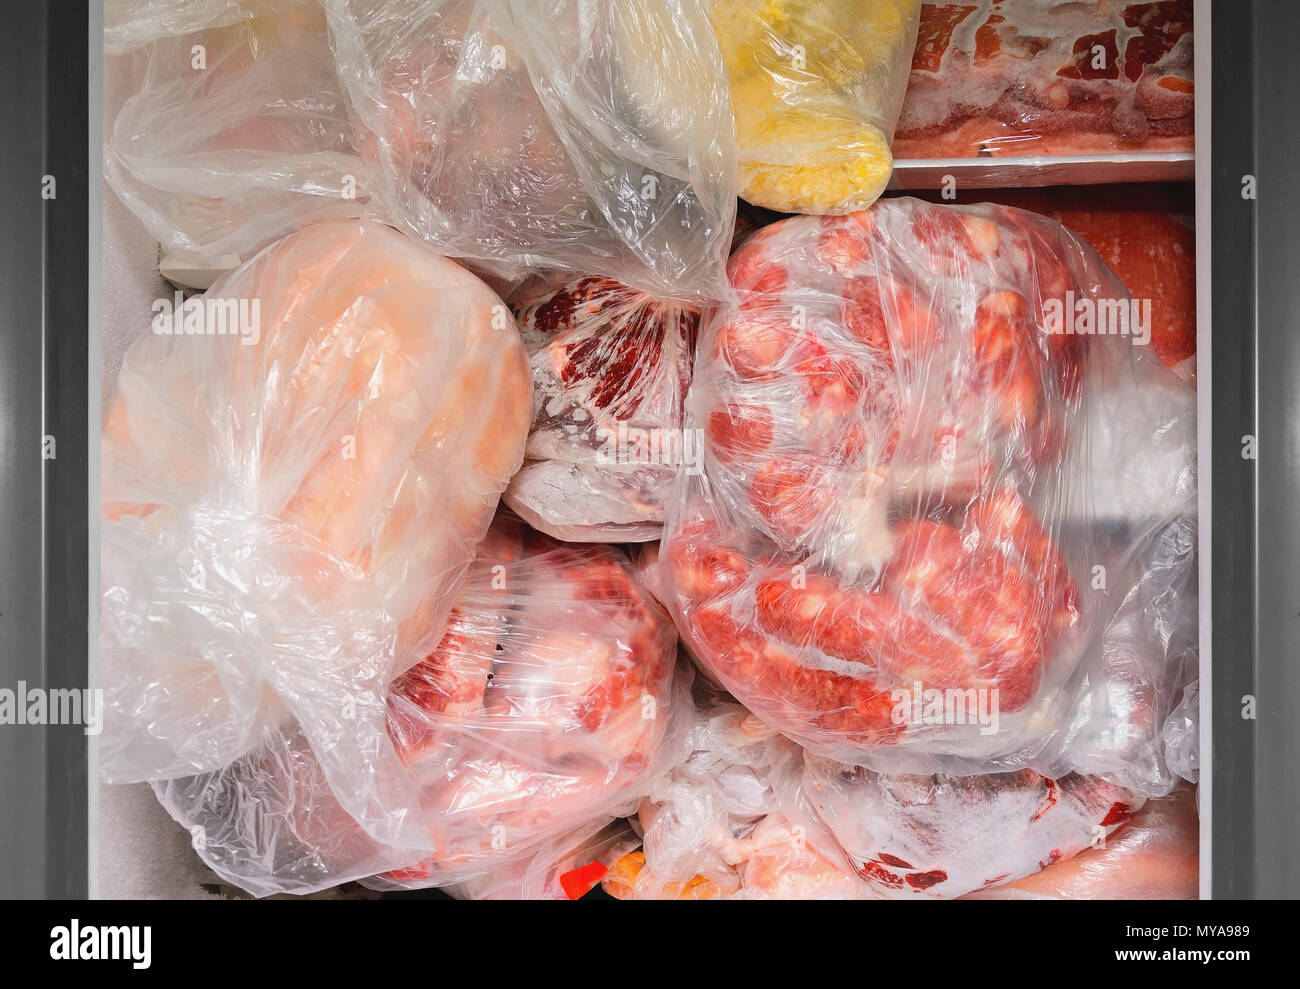 https://c8.alamy.com/comp/MYA989/frozen-food-in-the-freezer-bagged-frozen-meat-in-a-horizontal-freezer-food-preservation-MYA989.jpg